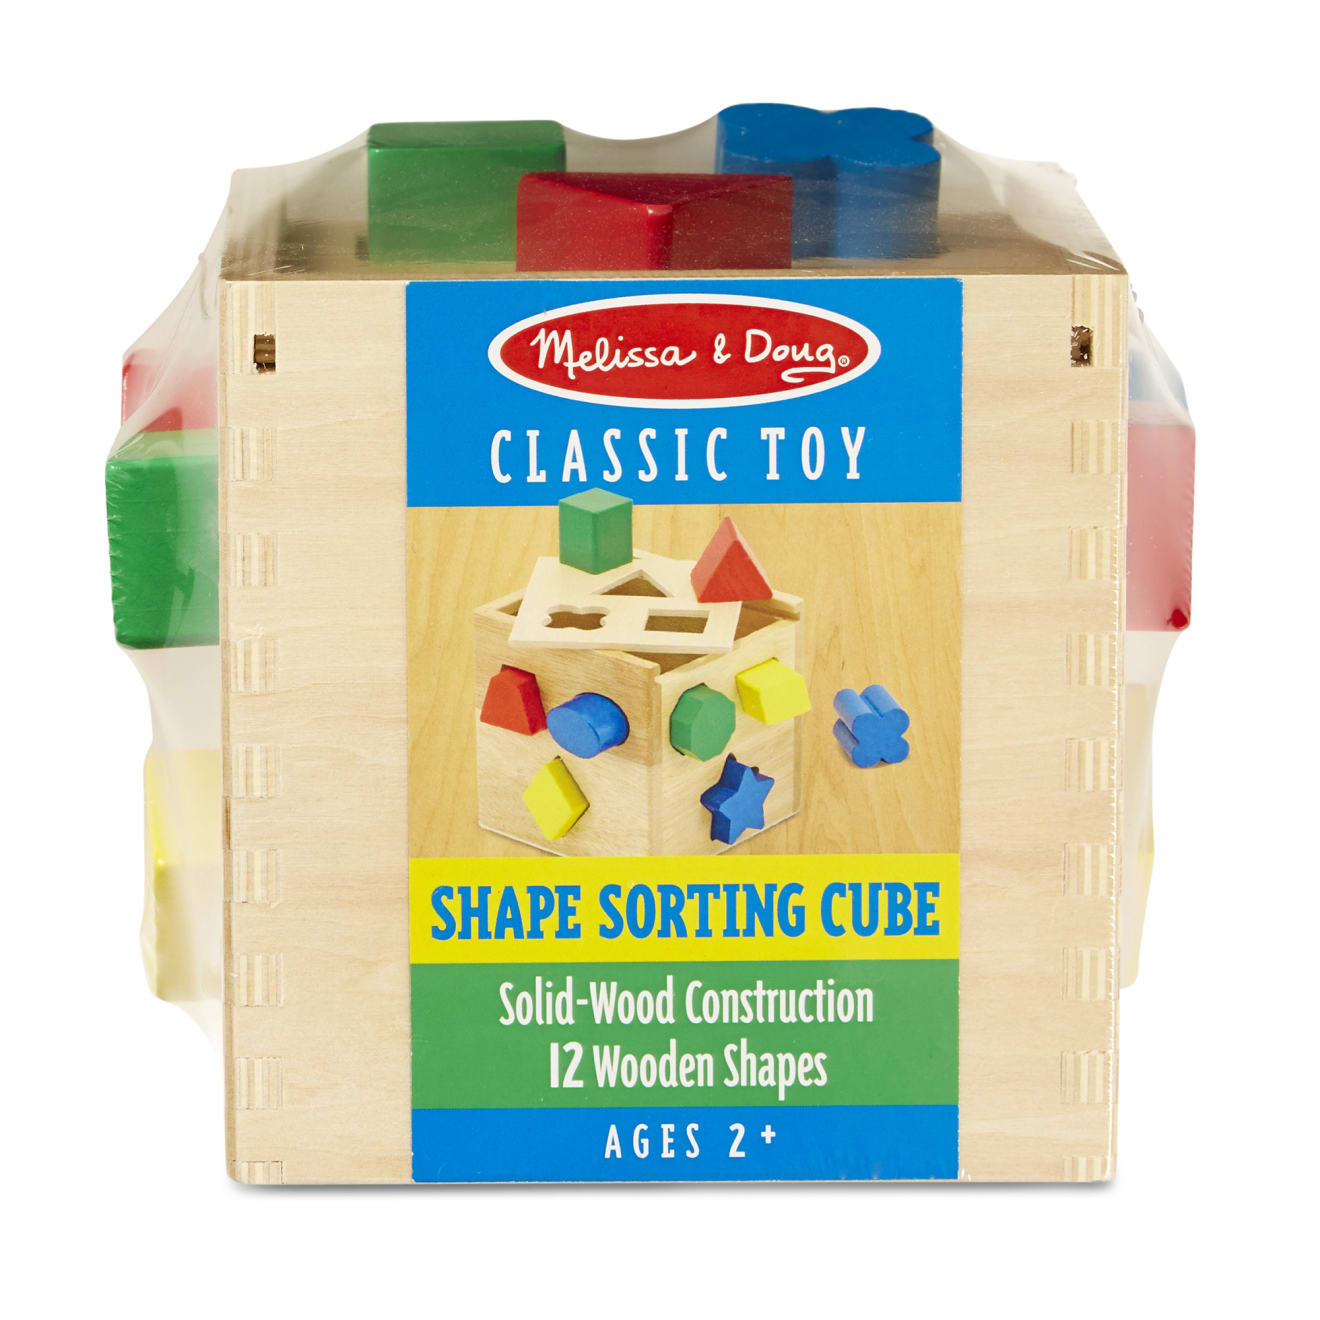 Shape Sorting Cube Classic Toy | Melissa & Doug